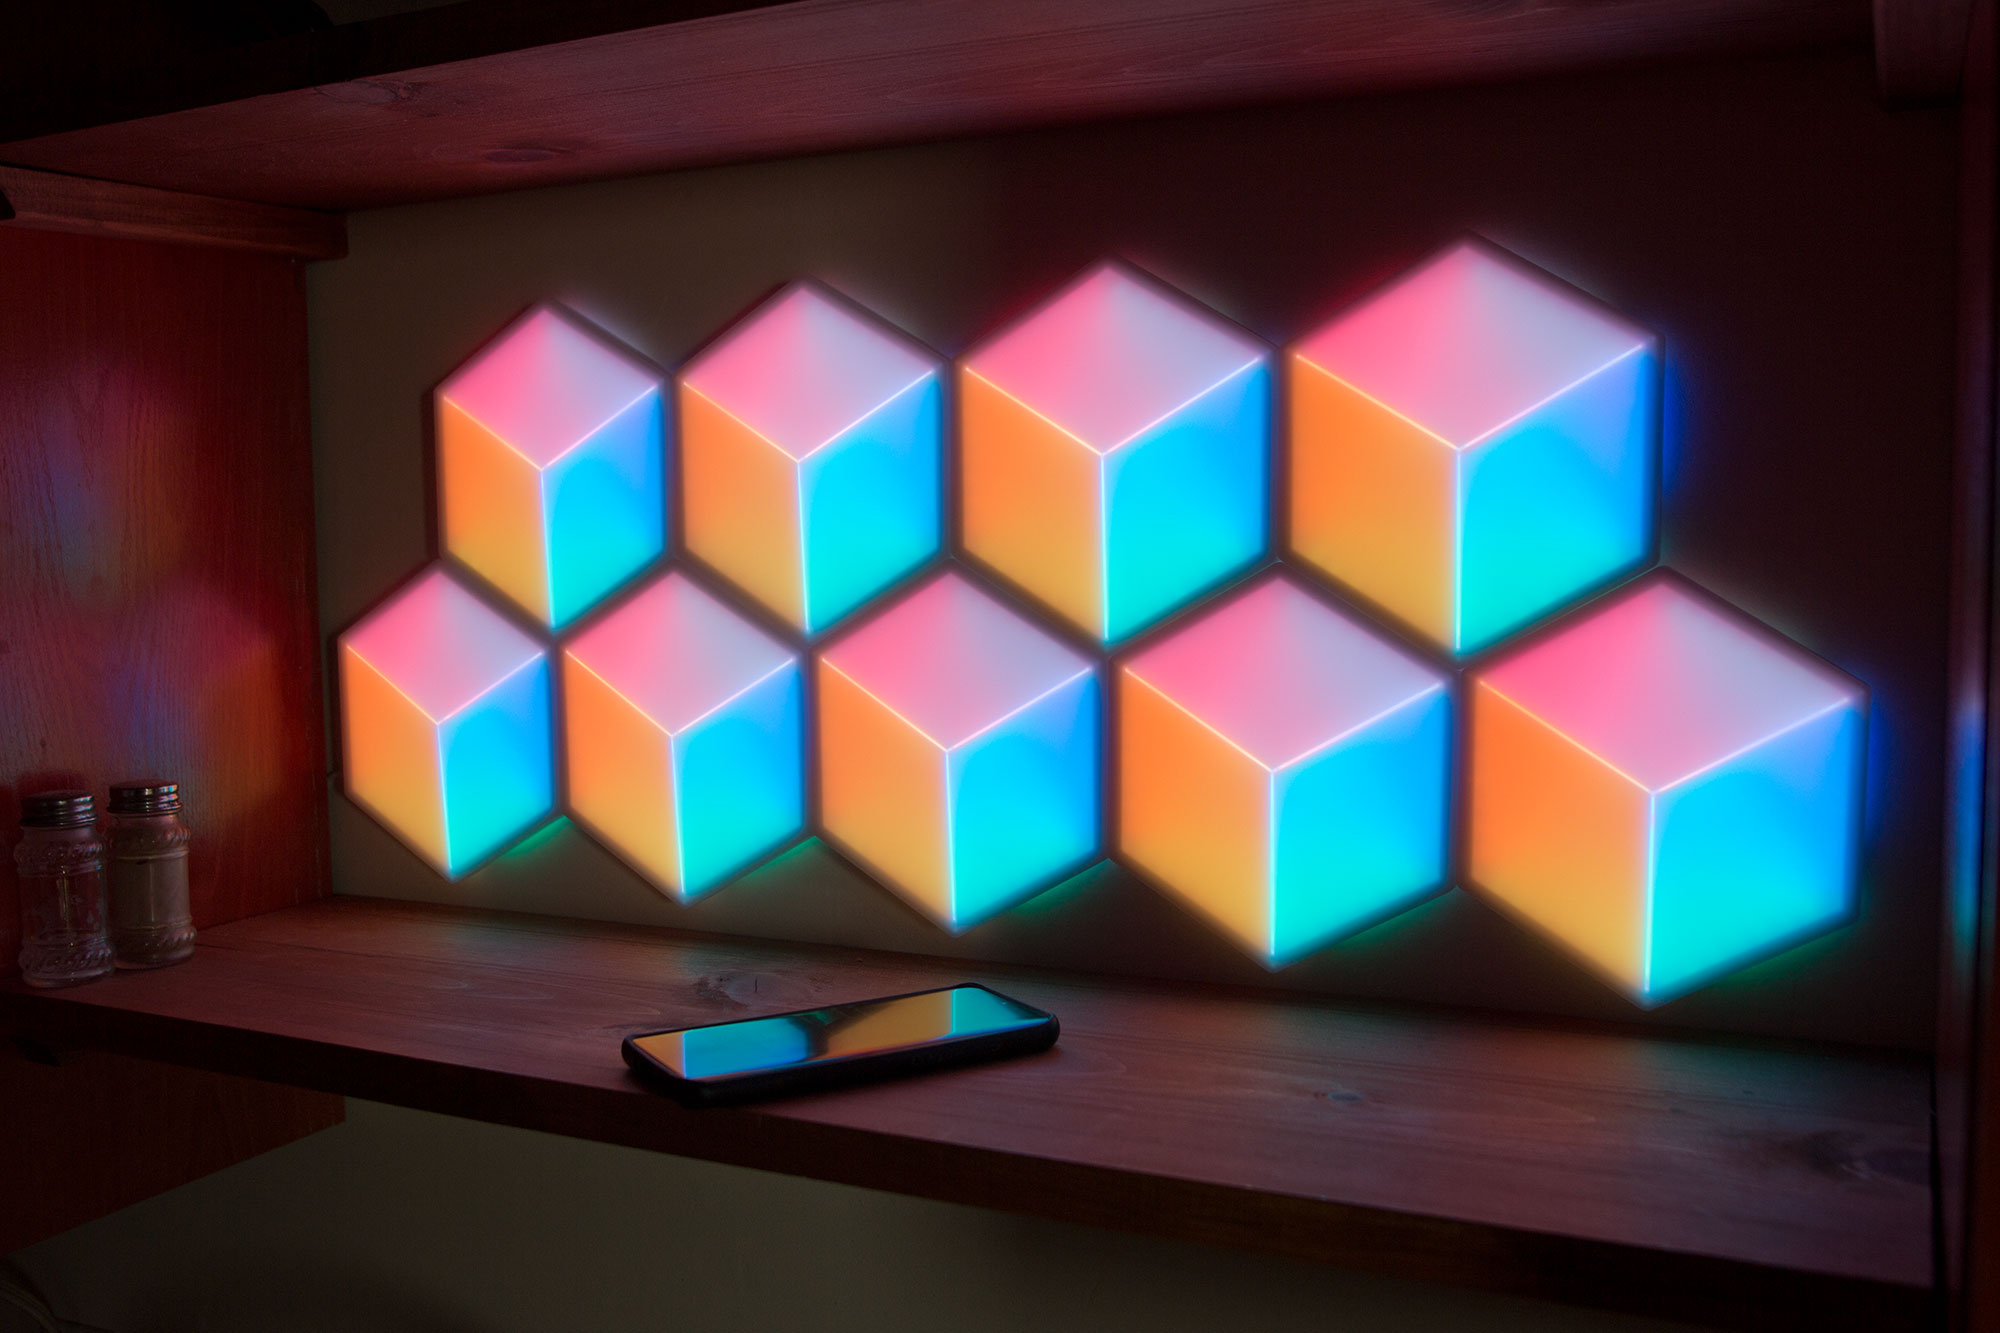 Govee Lights, the best Smart LED lights option for Streamers?